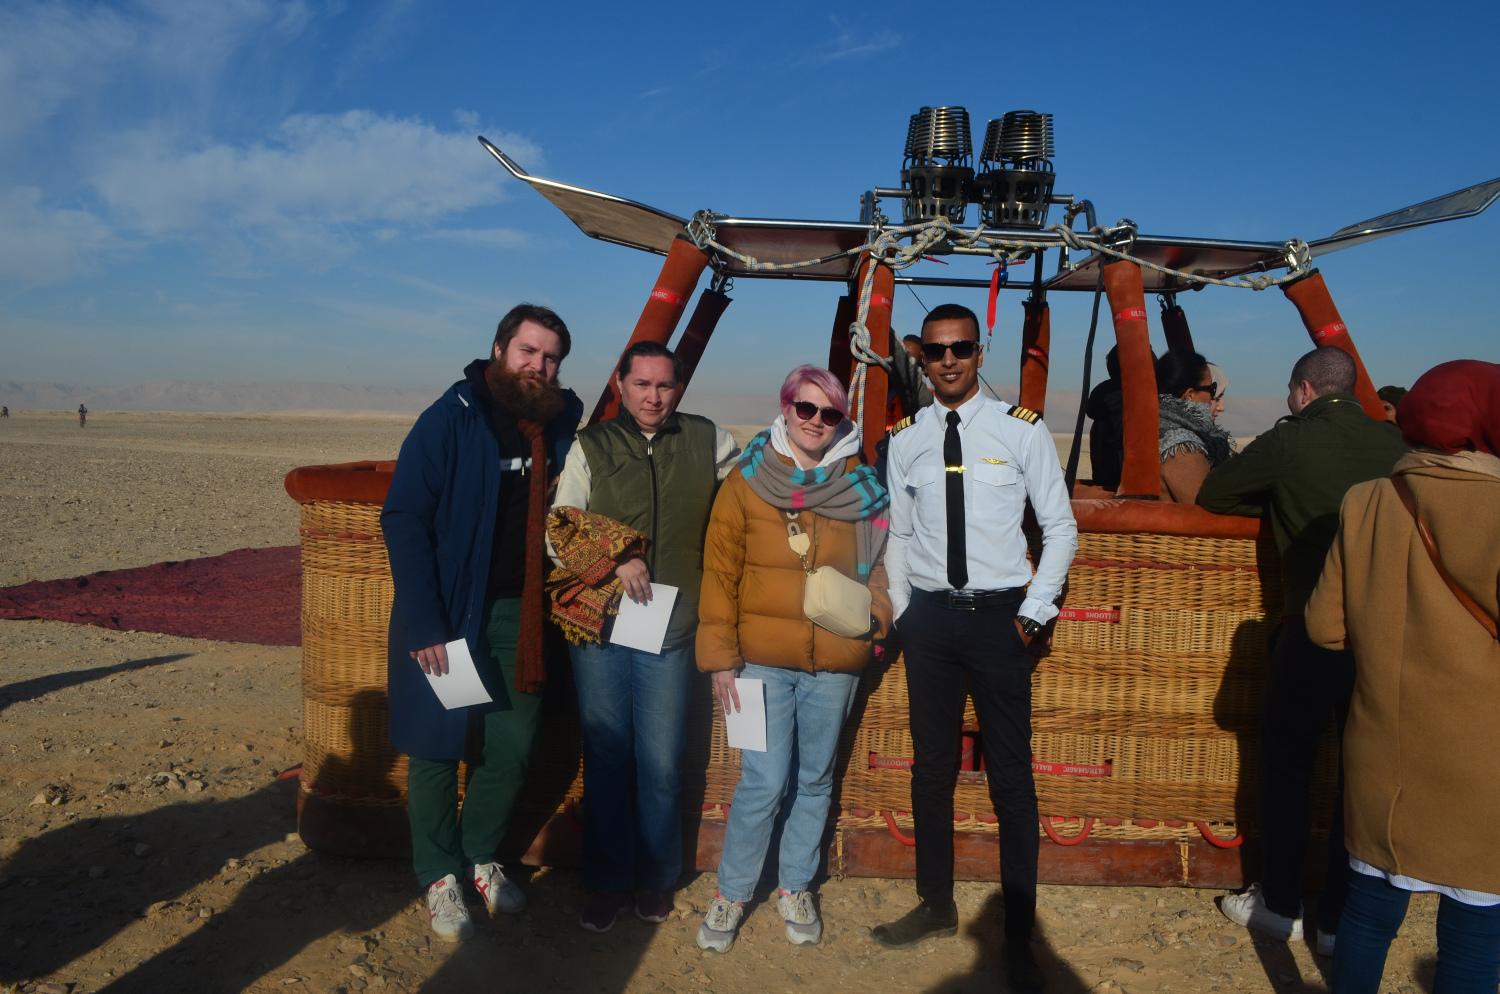 
Экскурсия на воздушном шаре над храмами Луксора